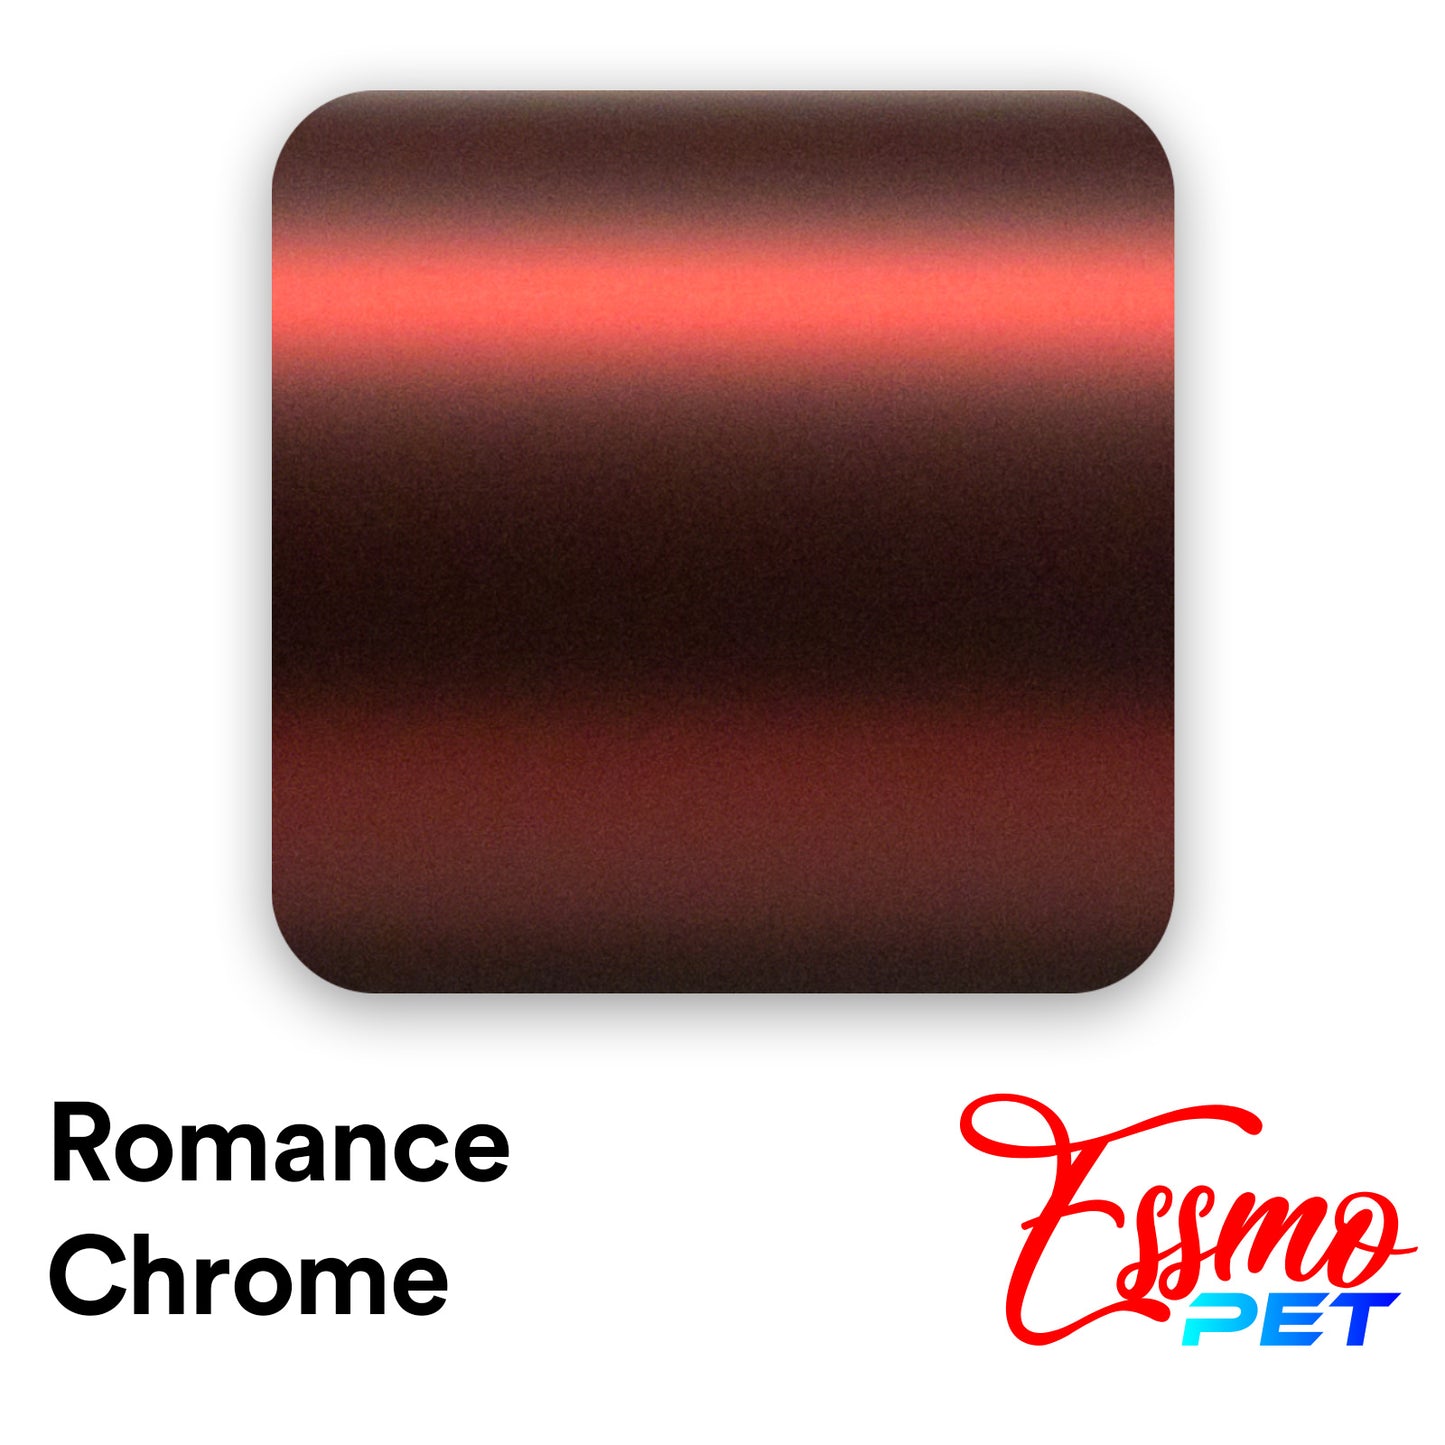 PET Romance Chrome Dark Red Vinyl Wrap